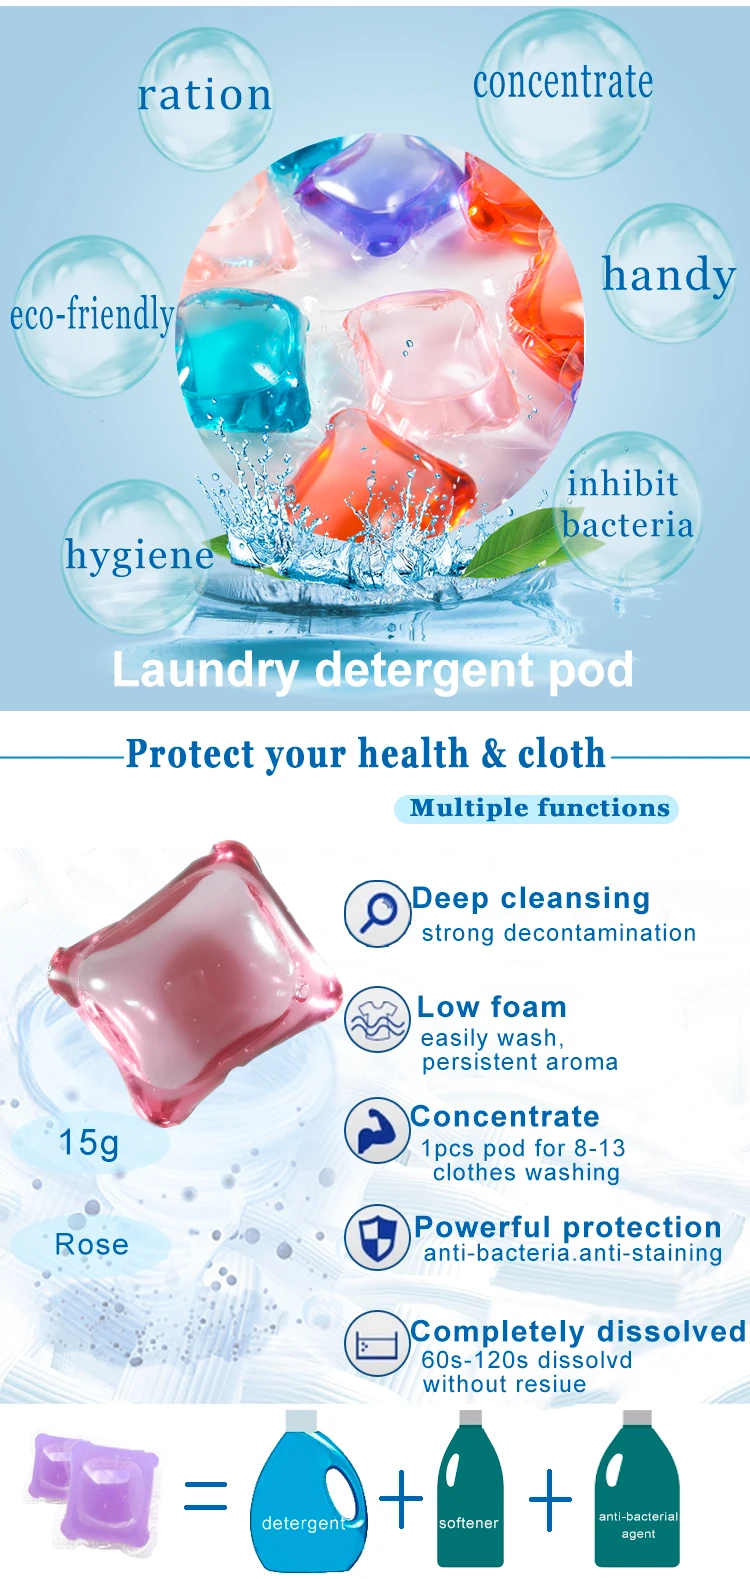 Liquid laundry powder soap excellent formula laundry detergent powder washing bulk 3inl pods